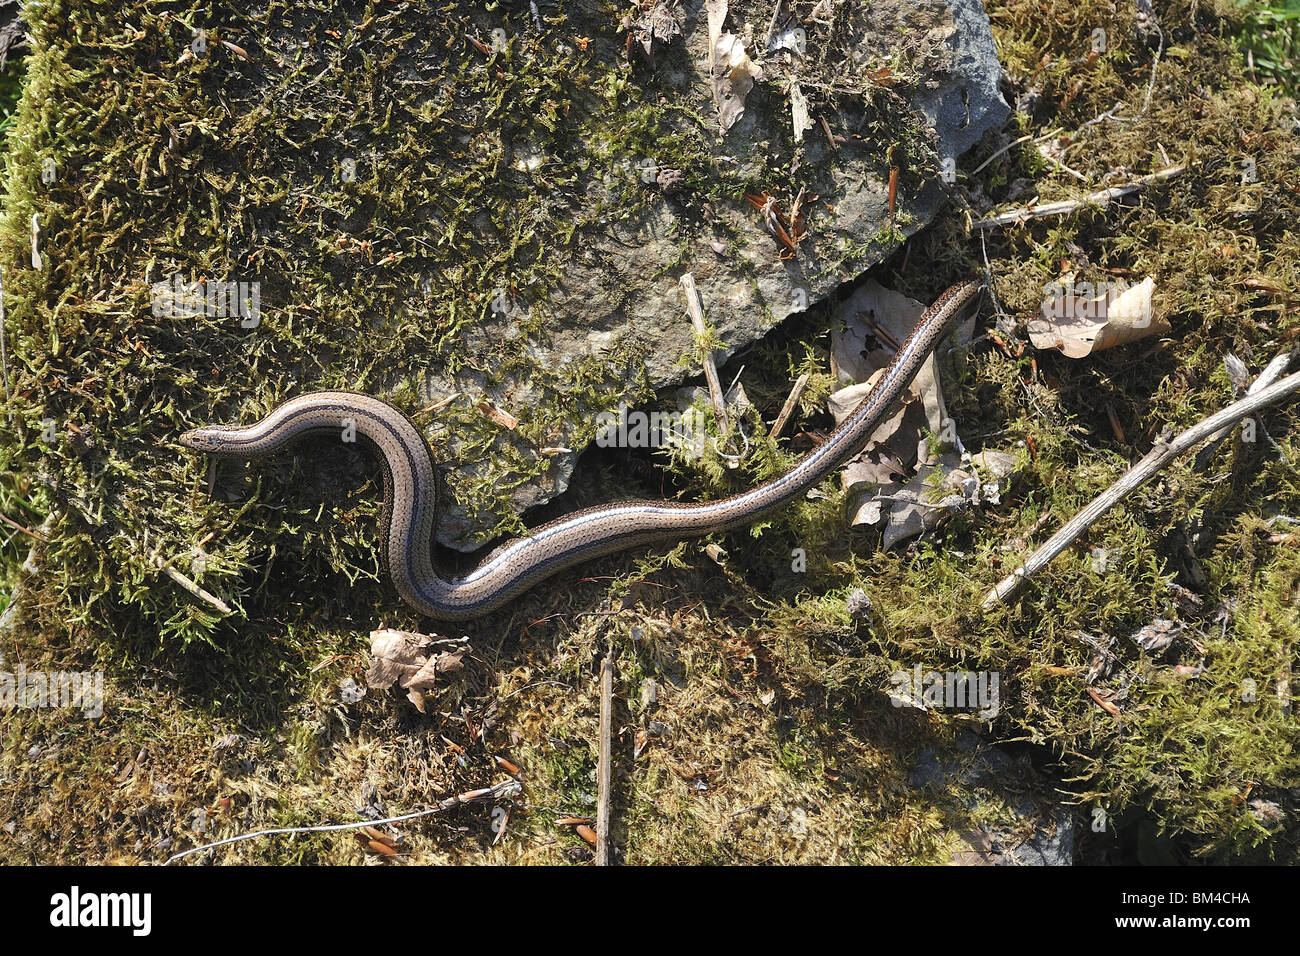 Pregnant female slow worm crawling on mossy stone Stock Photo - Alamy